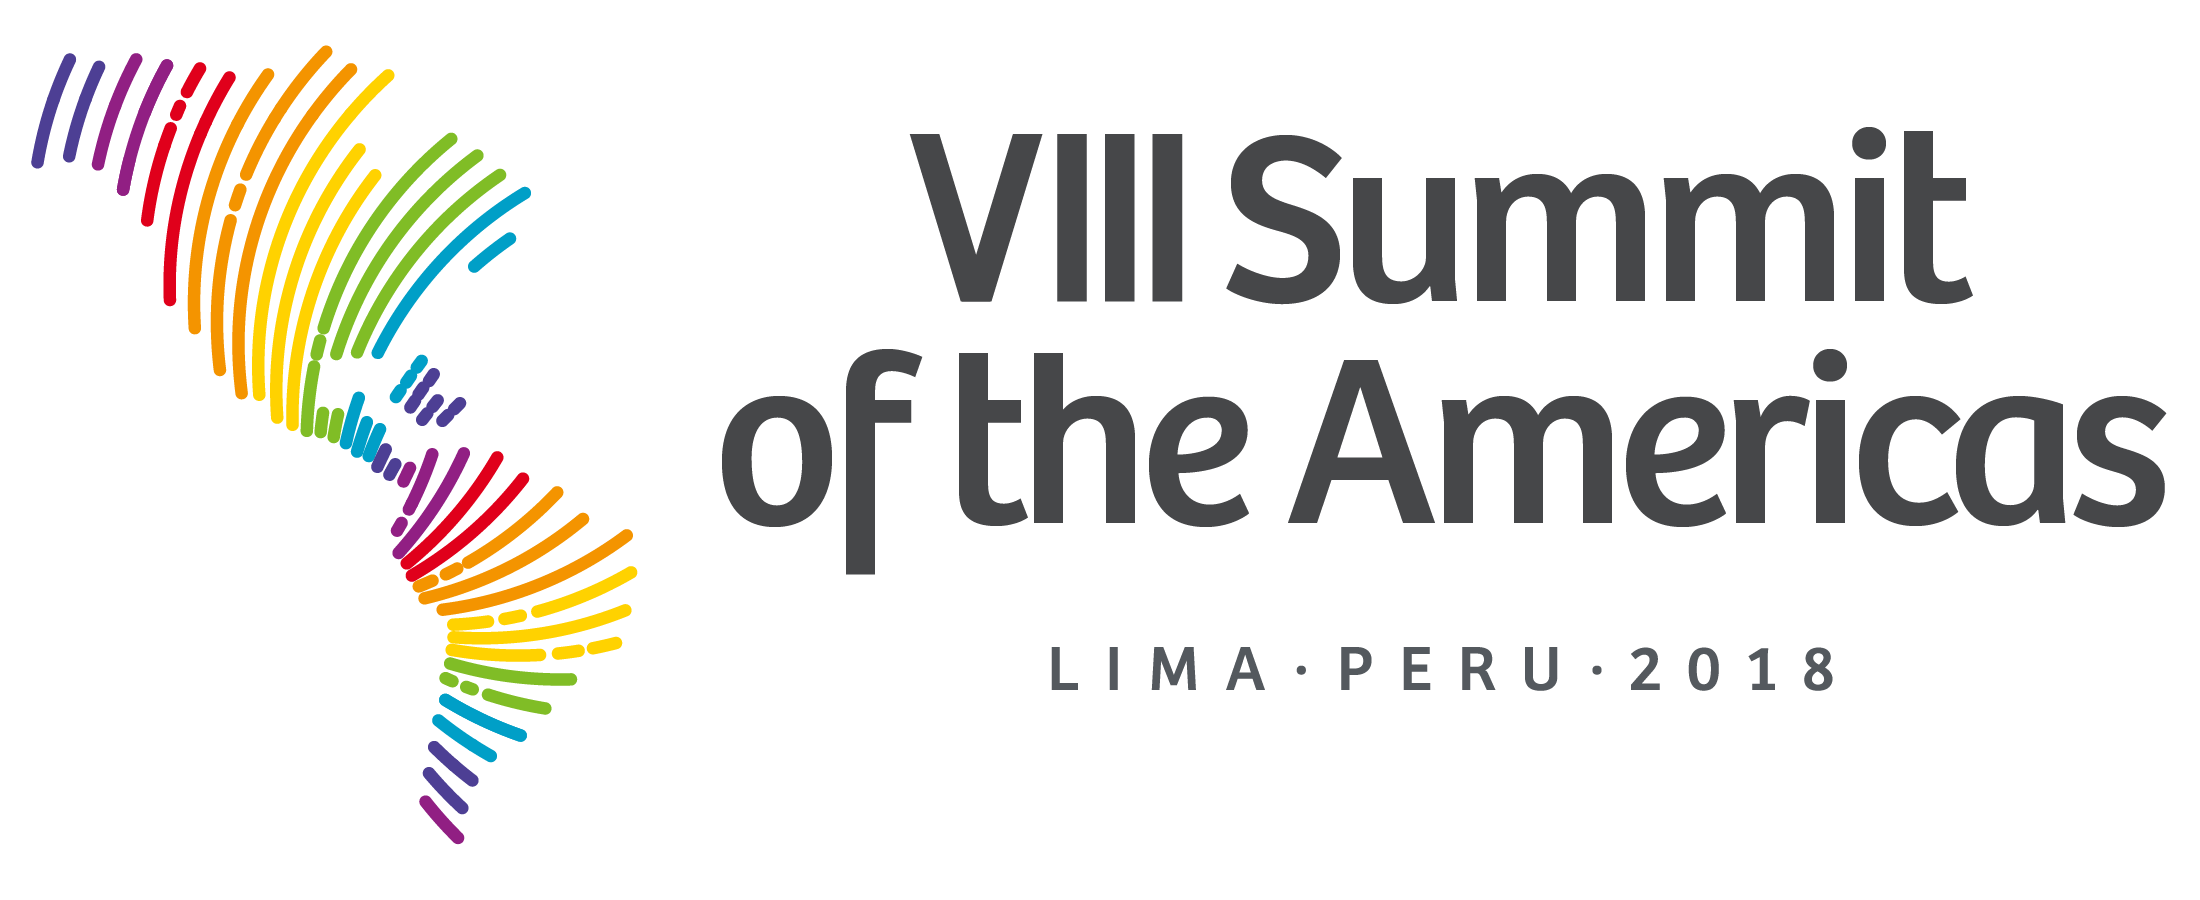 VIII Summit of the Americas